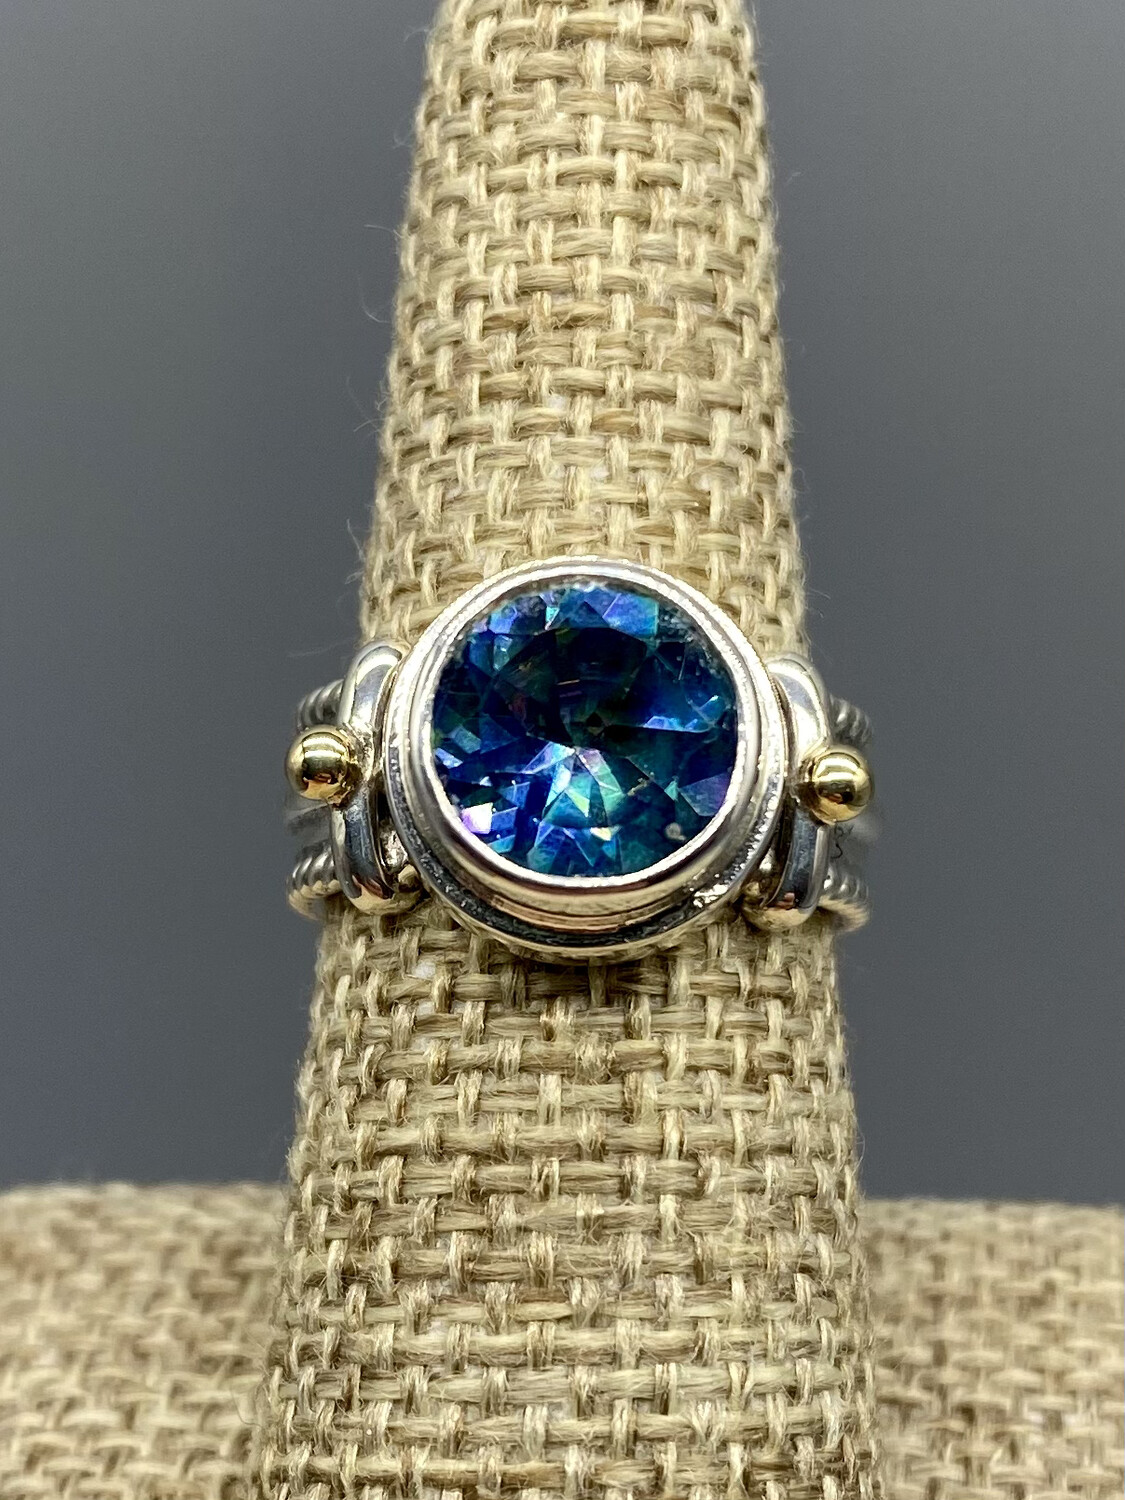 Sz 6 Royal Blue Topaz Ring s/s -   Handmade by Reve - Phoenix AZ